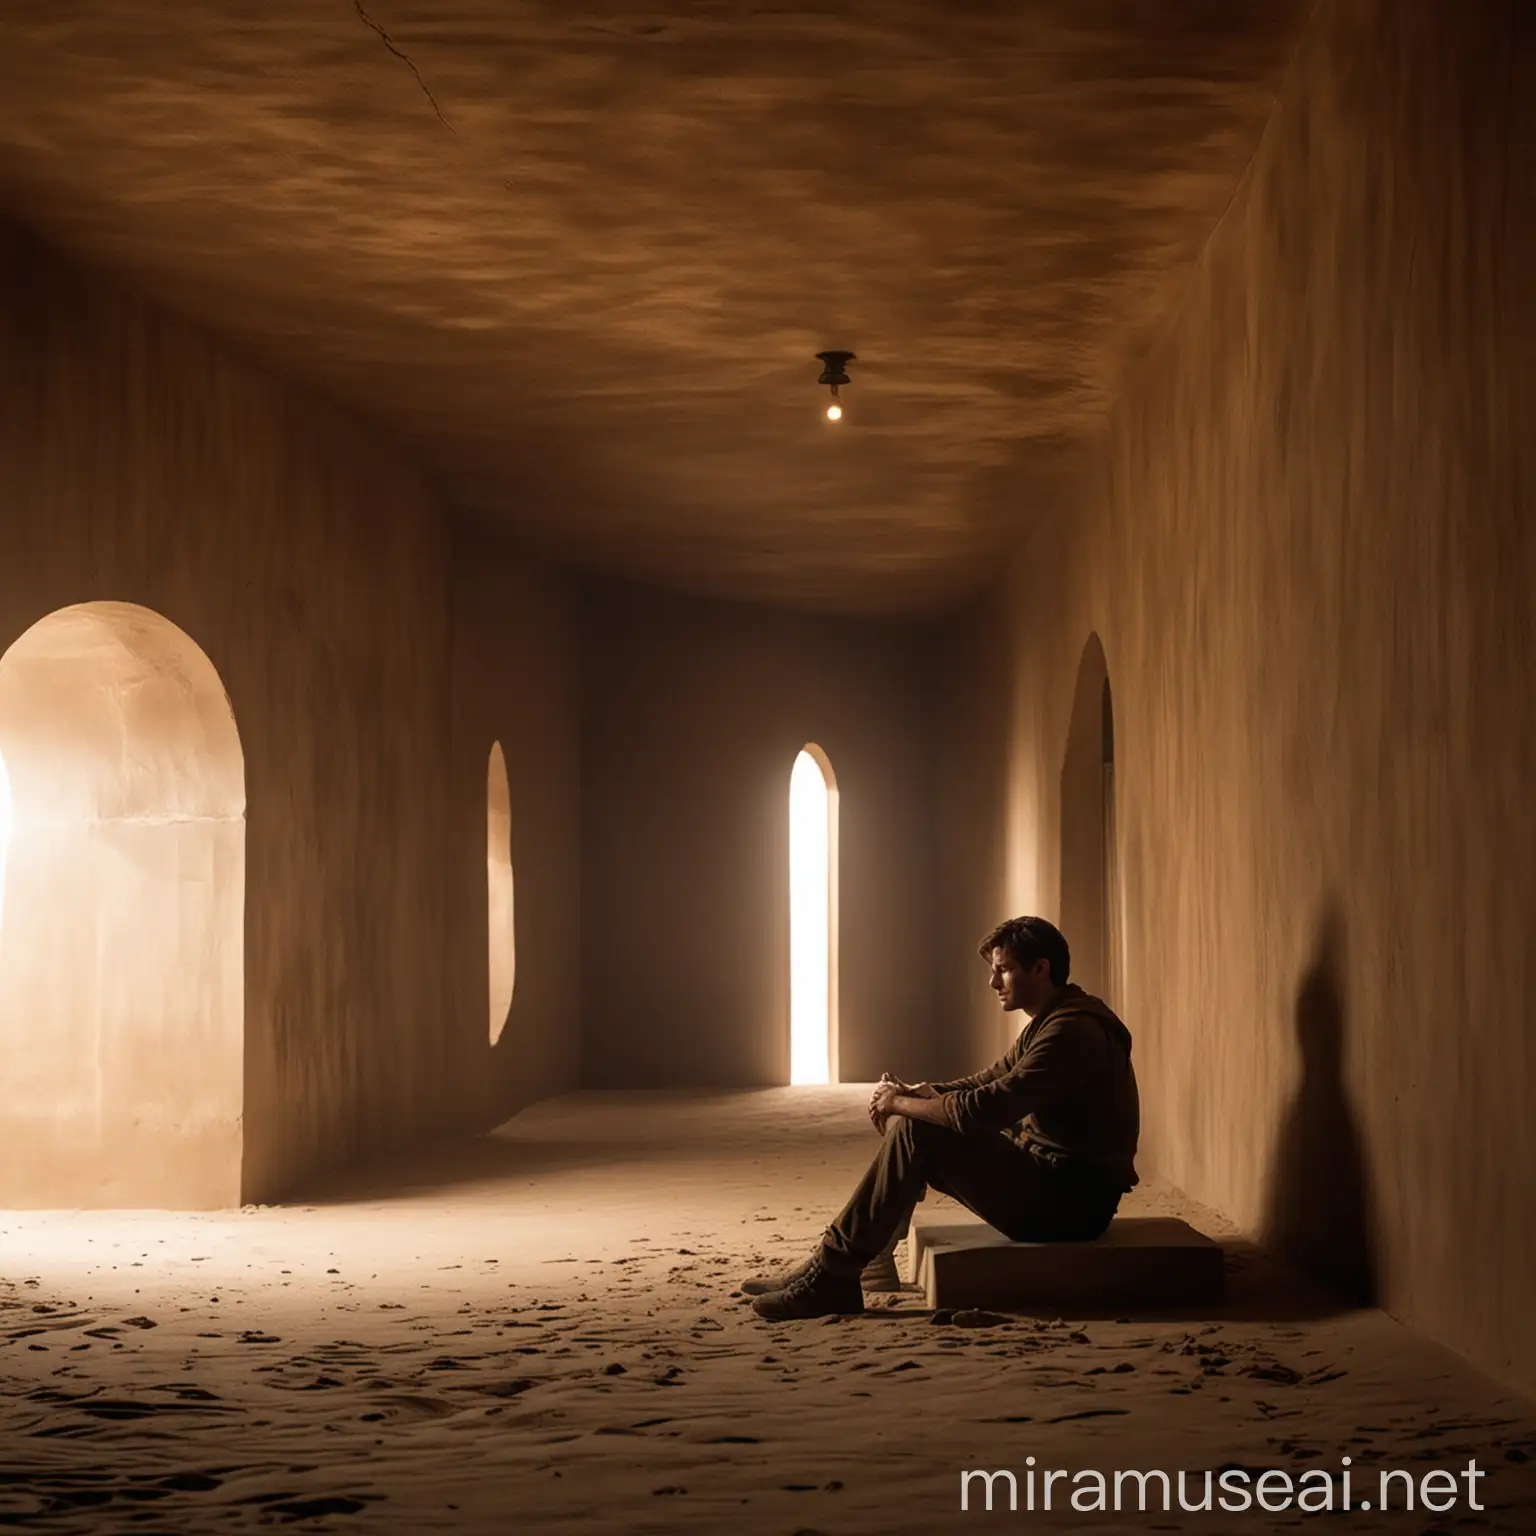 Contemplative Man Sitting in Illuminated DuneStyle Building